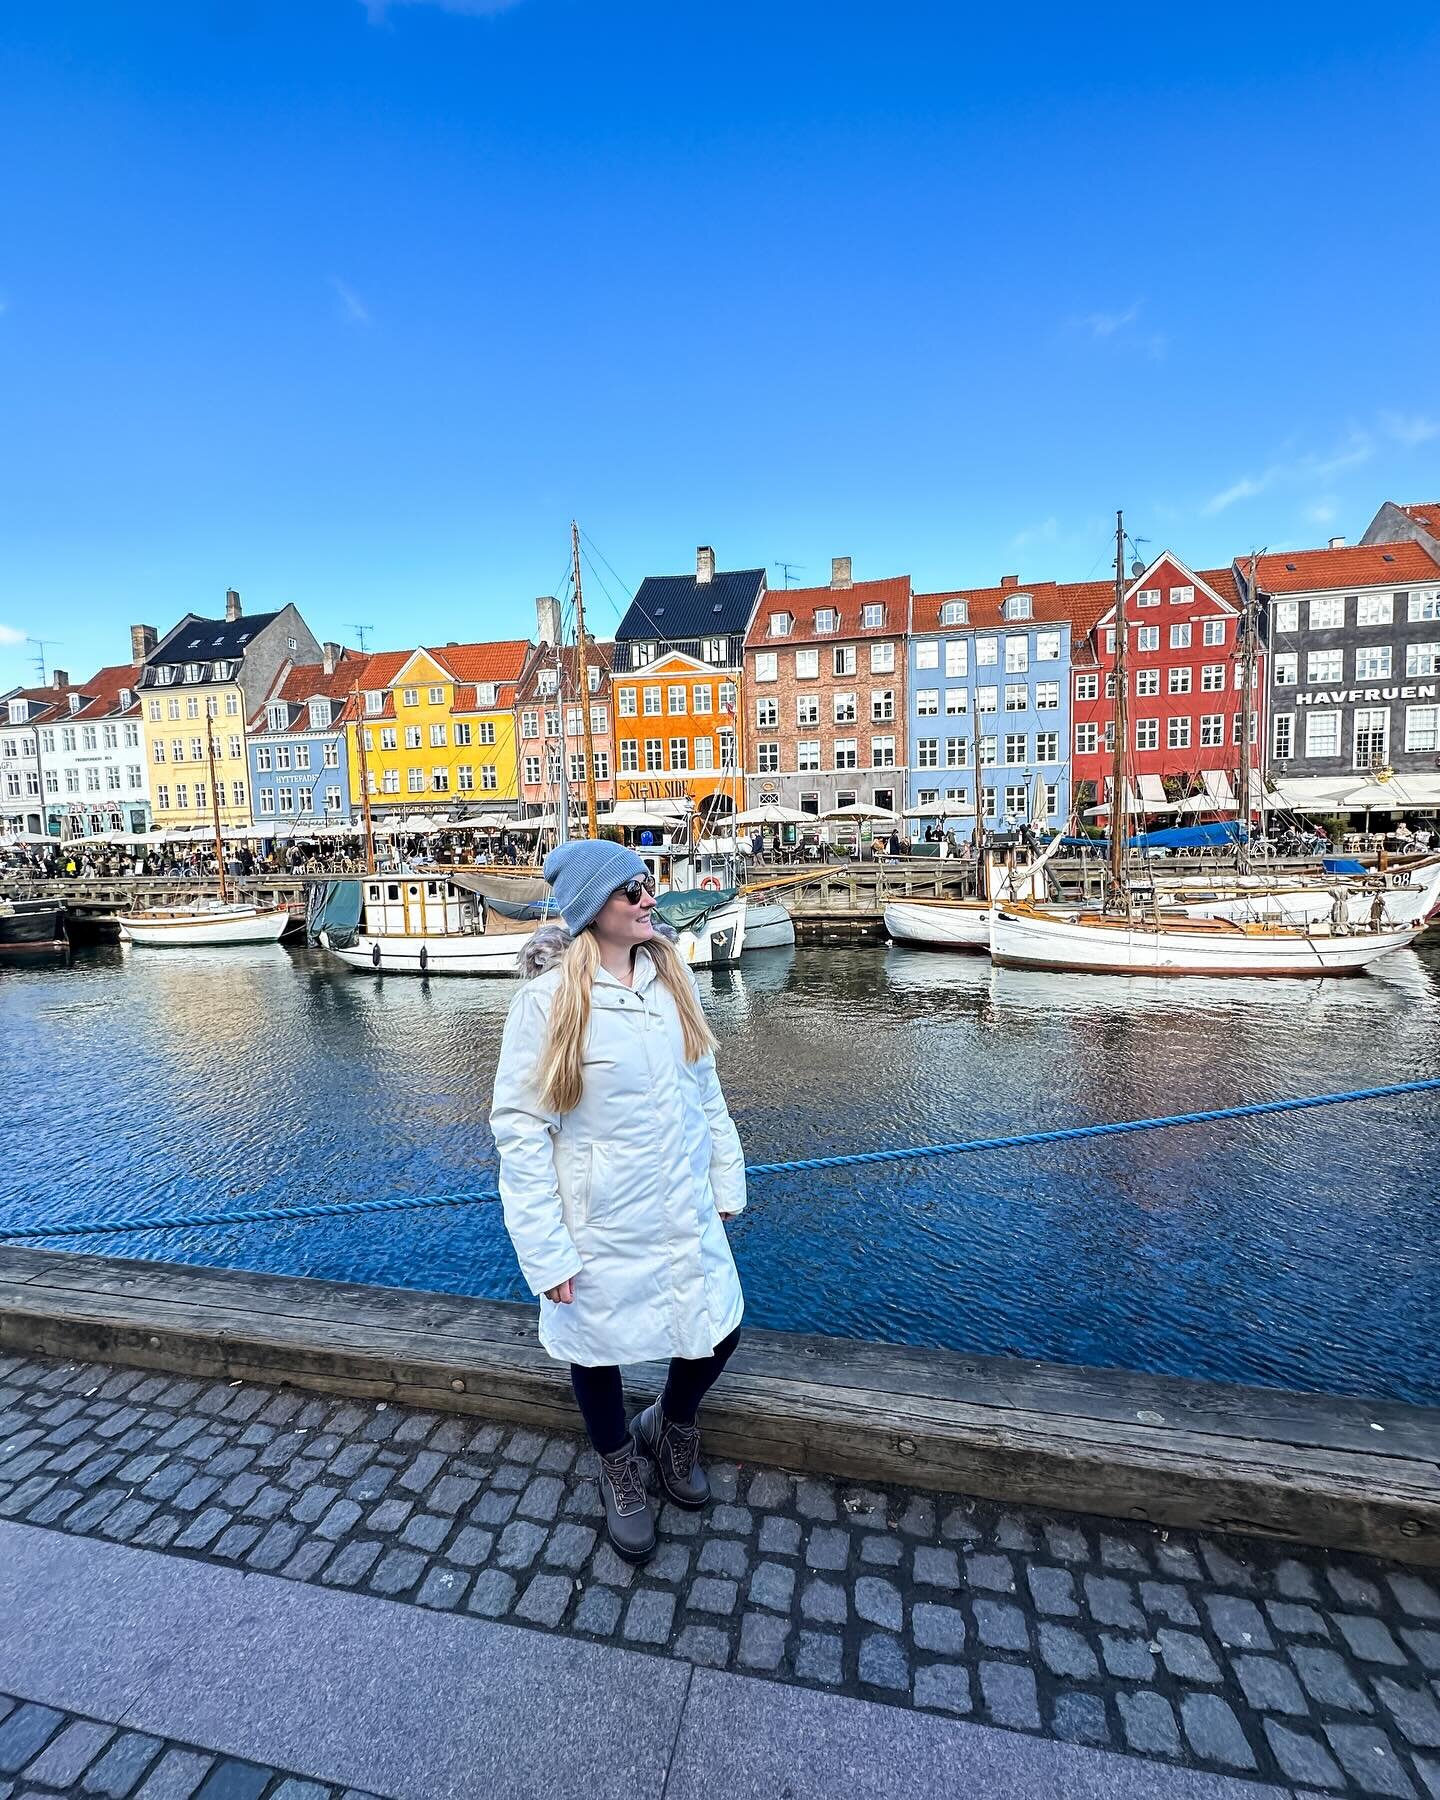 The perfect blue skies for strolling Copenhagen. 🩶
.
.
.
.
#CocoinDenmark #travel #NationalCocoGraphic #alwaysttaveling #explore #VisitDenmark #ExploreCopenhagen #Copenhagen